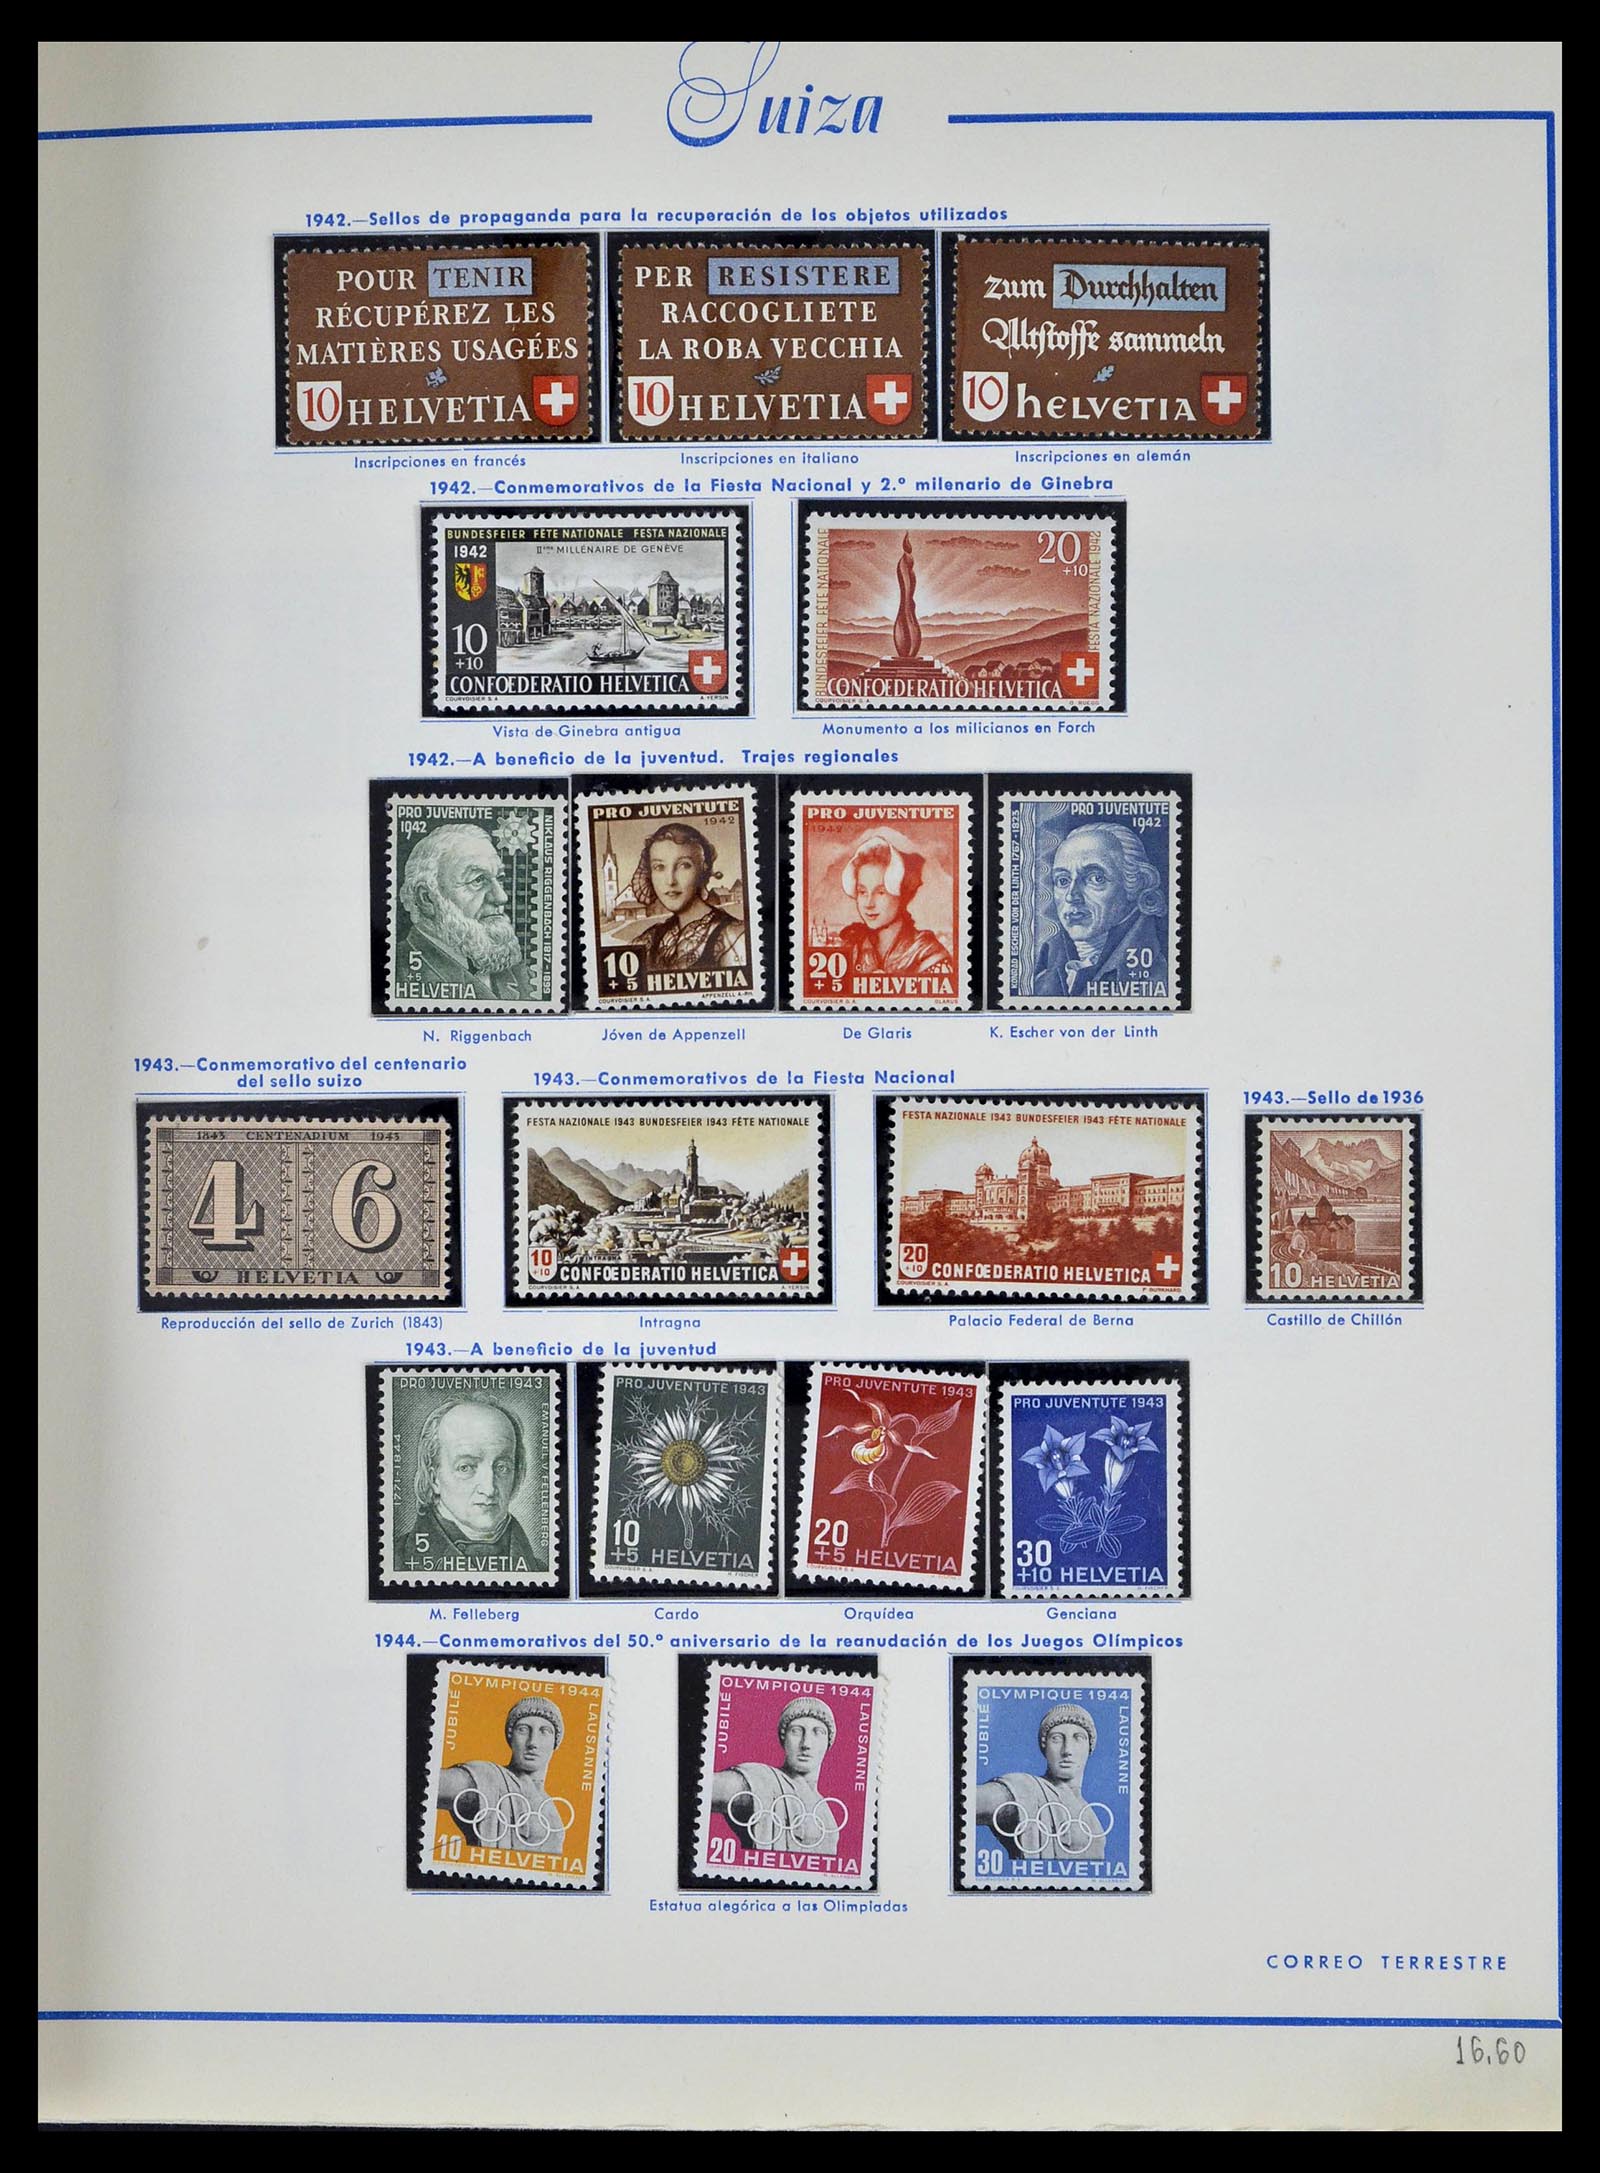 39217 0023 - Stamp collection 39217 Switzerland 1850-1986.